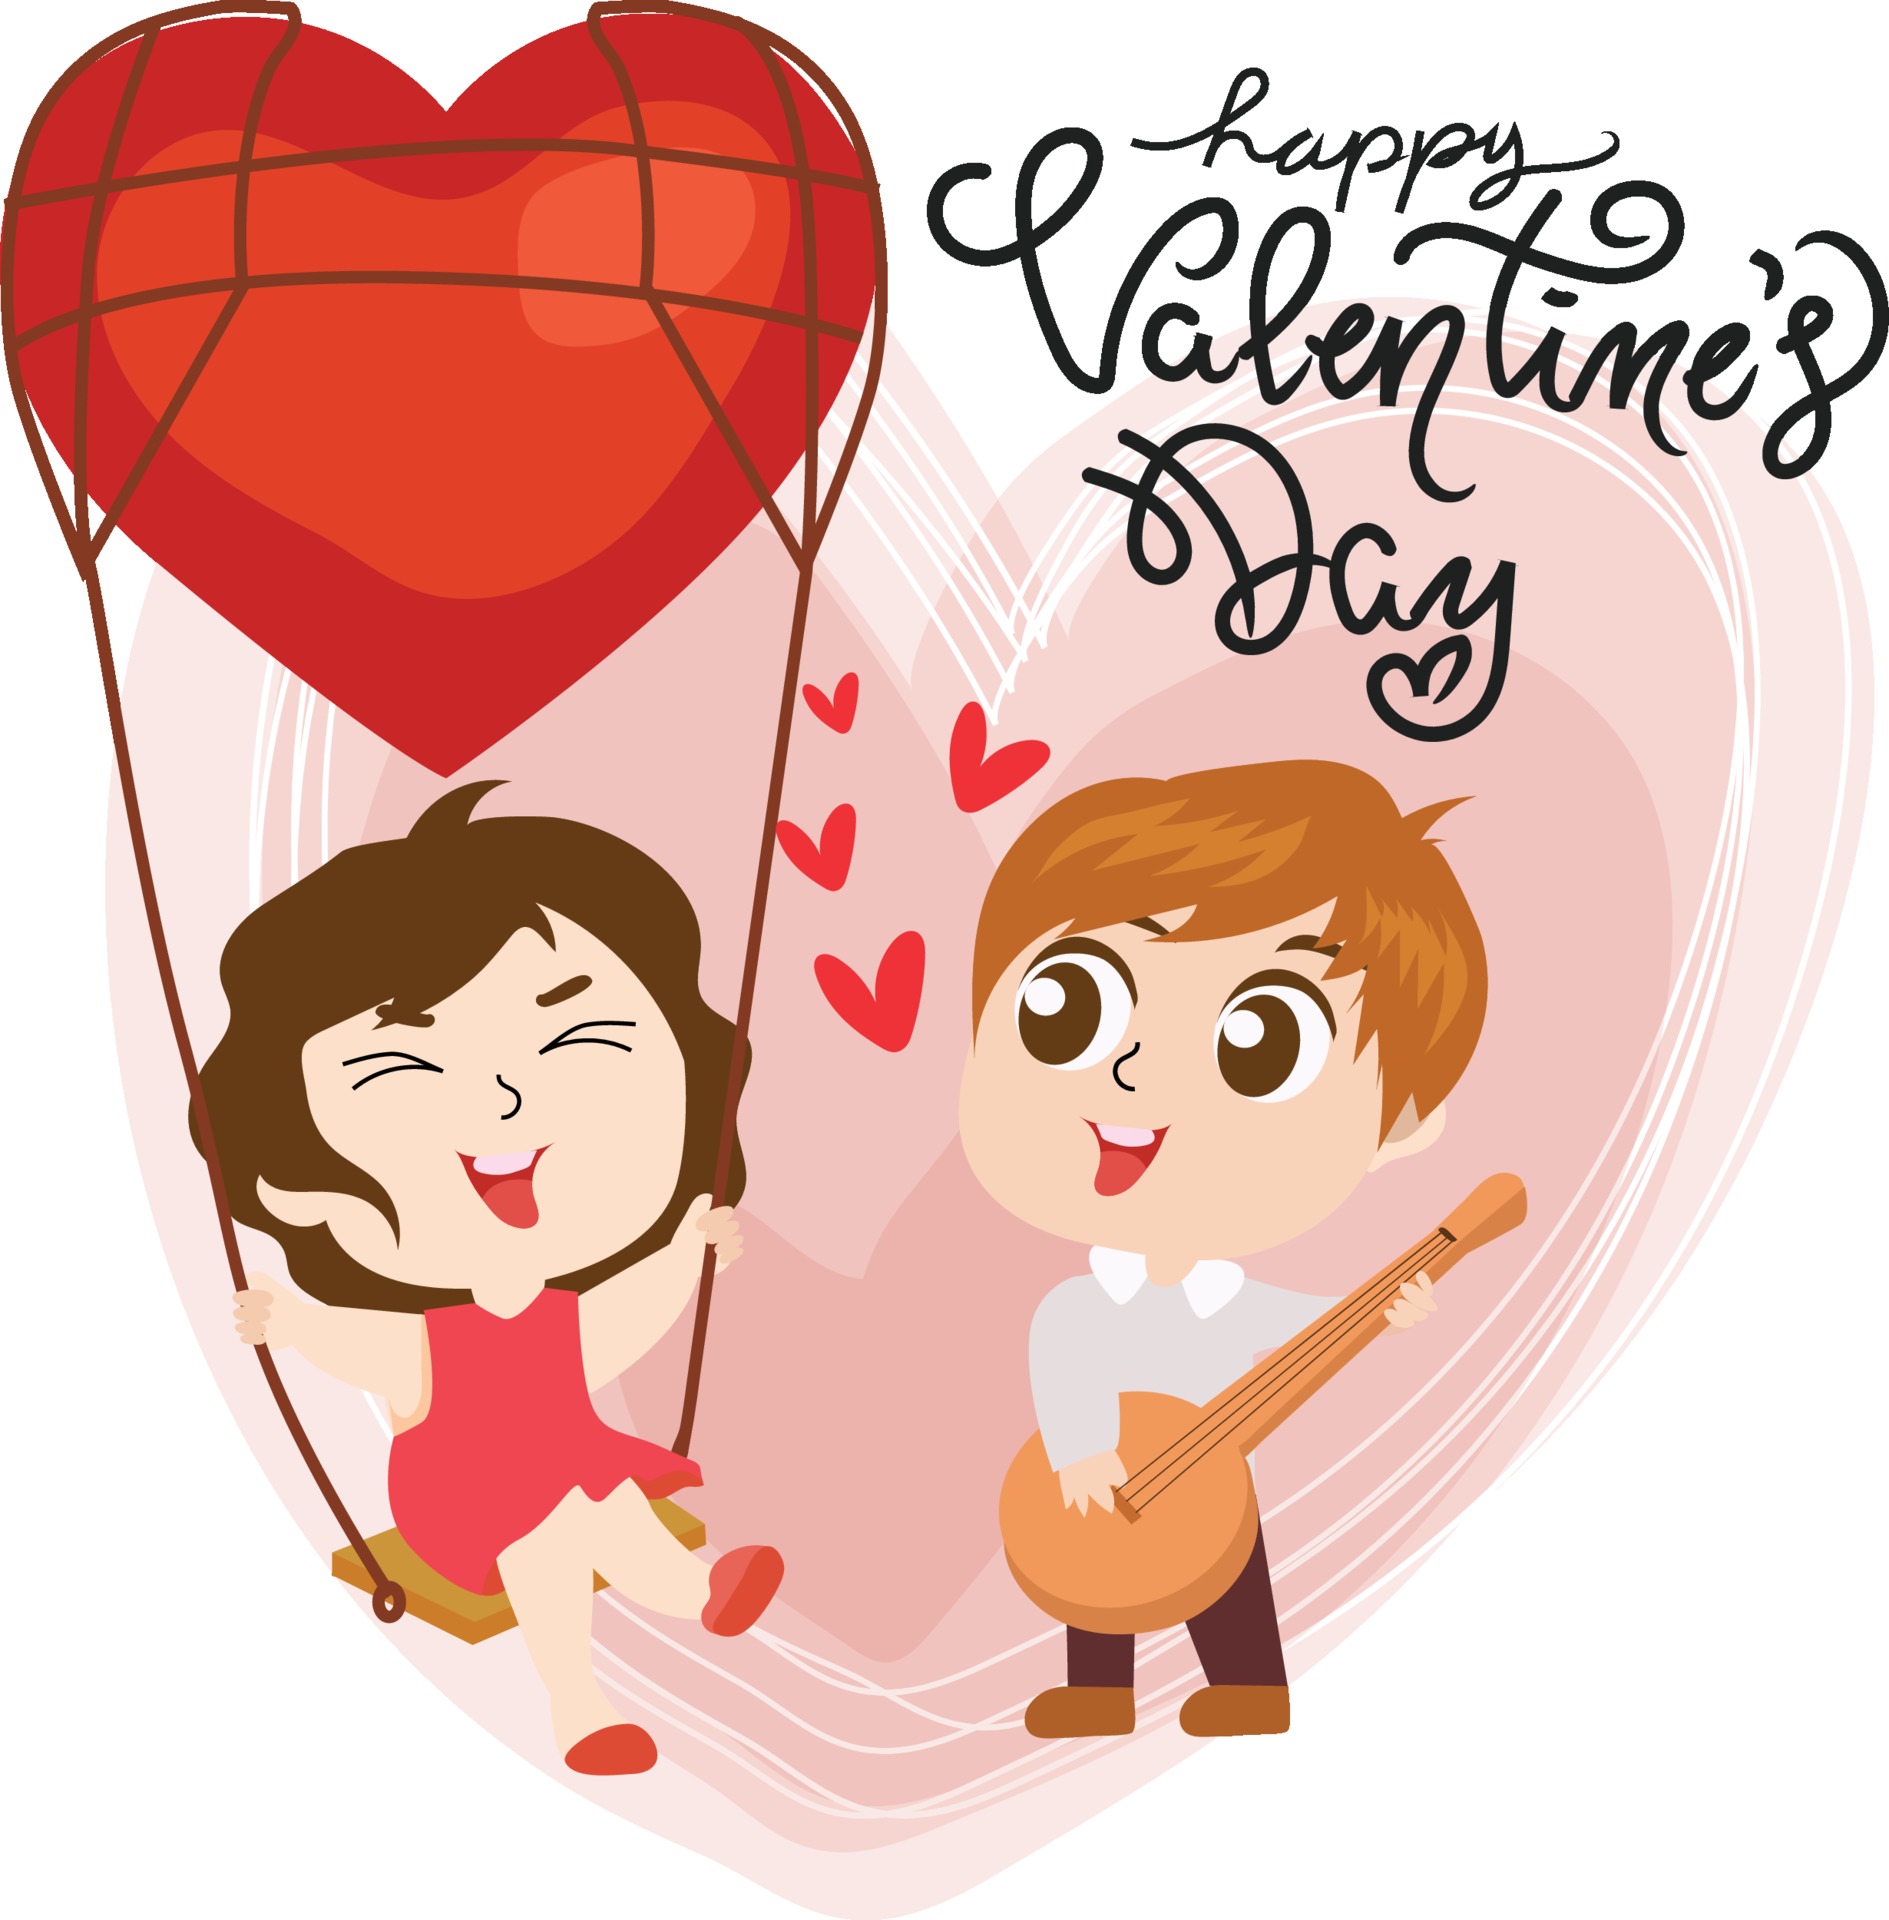 Happy valentine's day girl and boy cartoon design